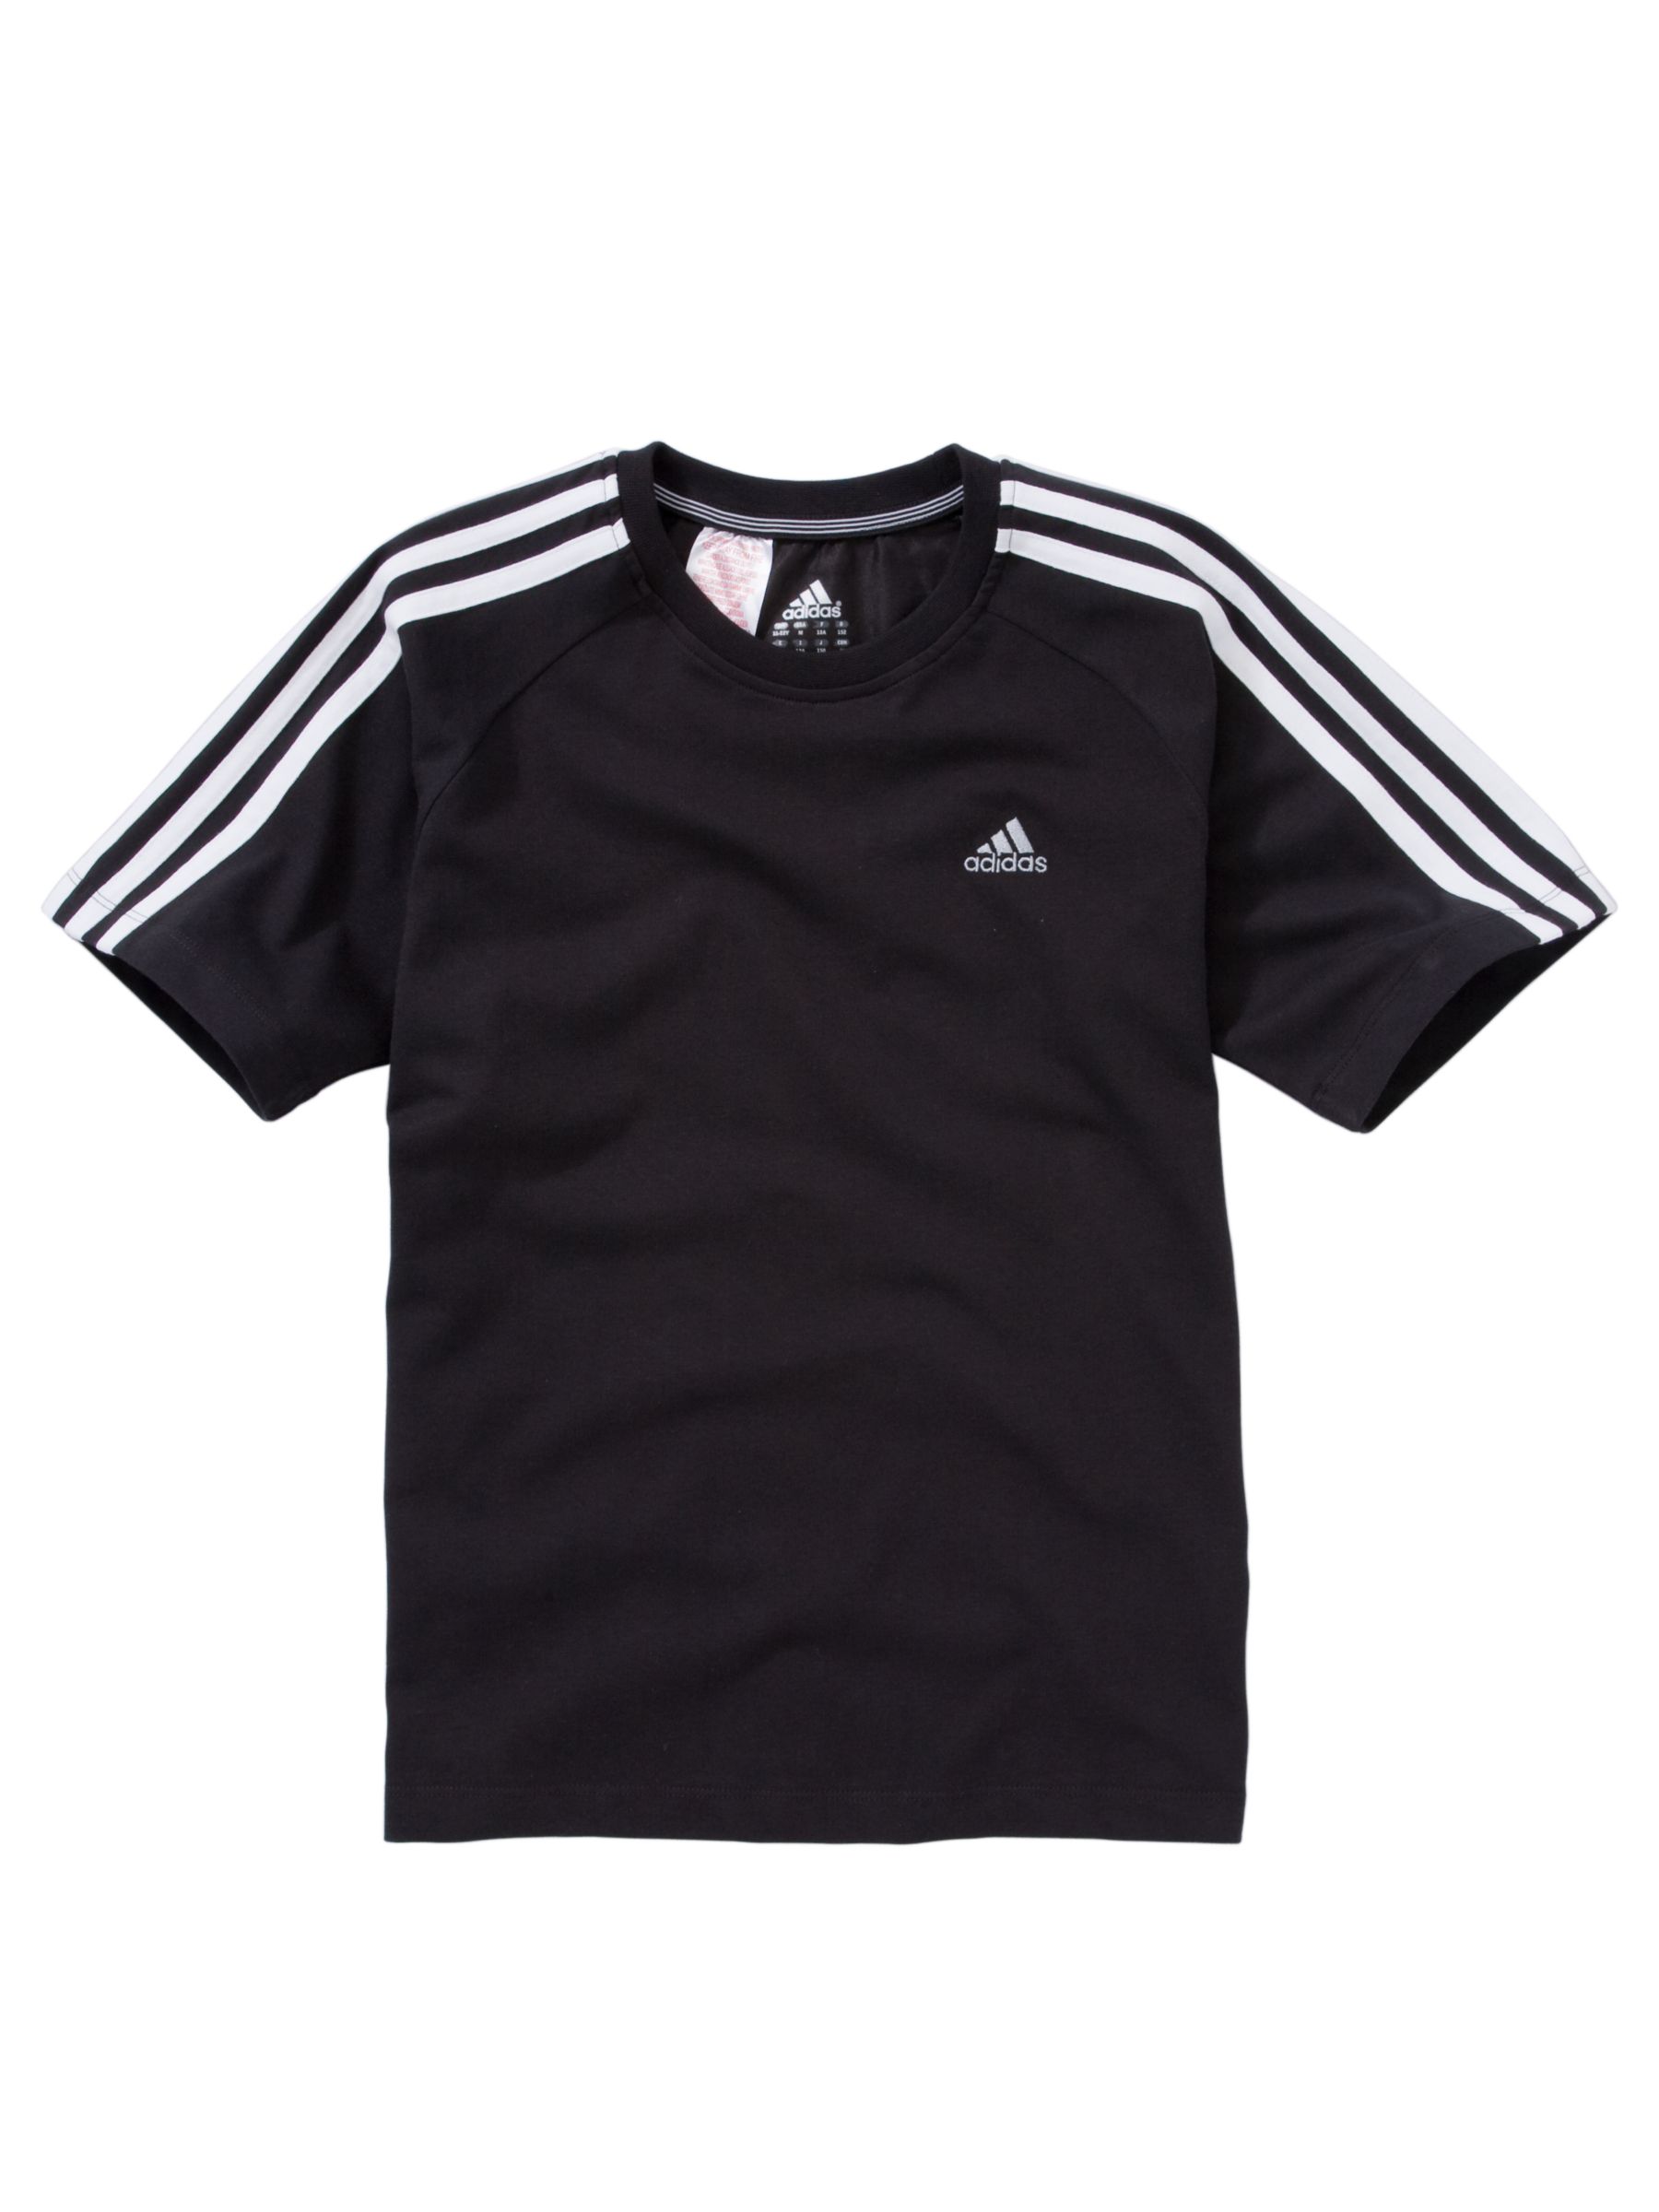 Adidas Short Sleeve T-Shirt, Black/White